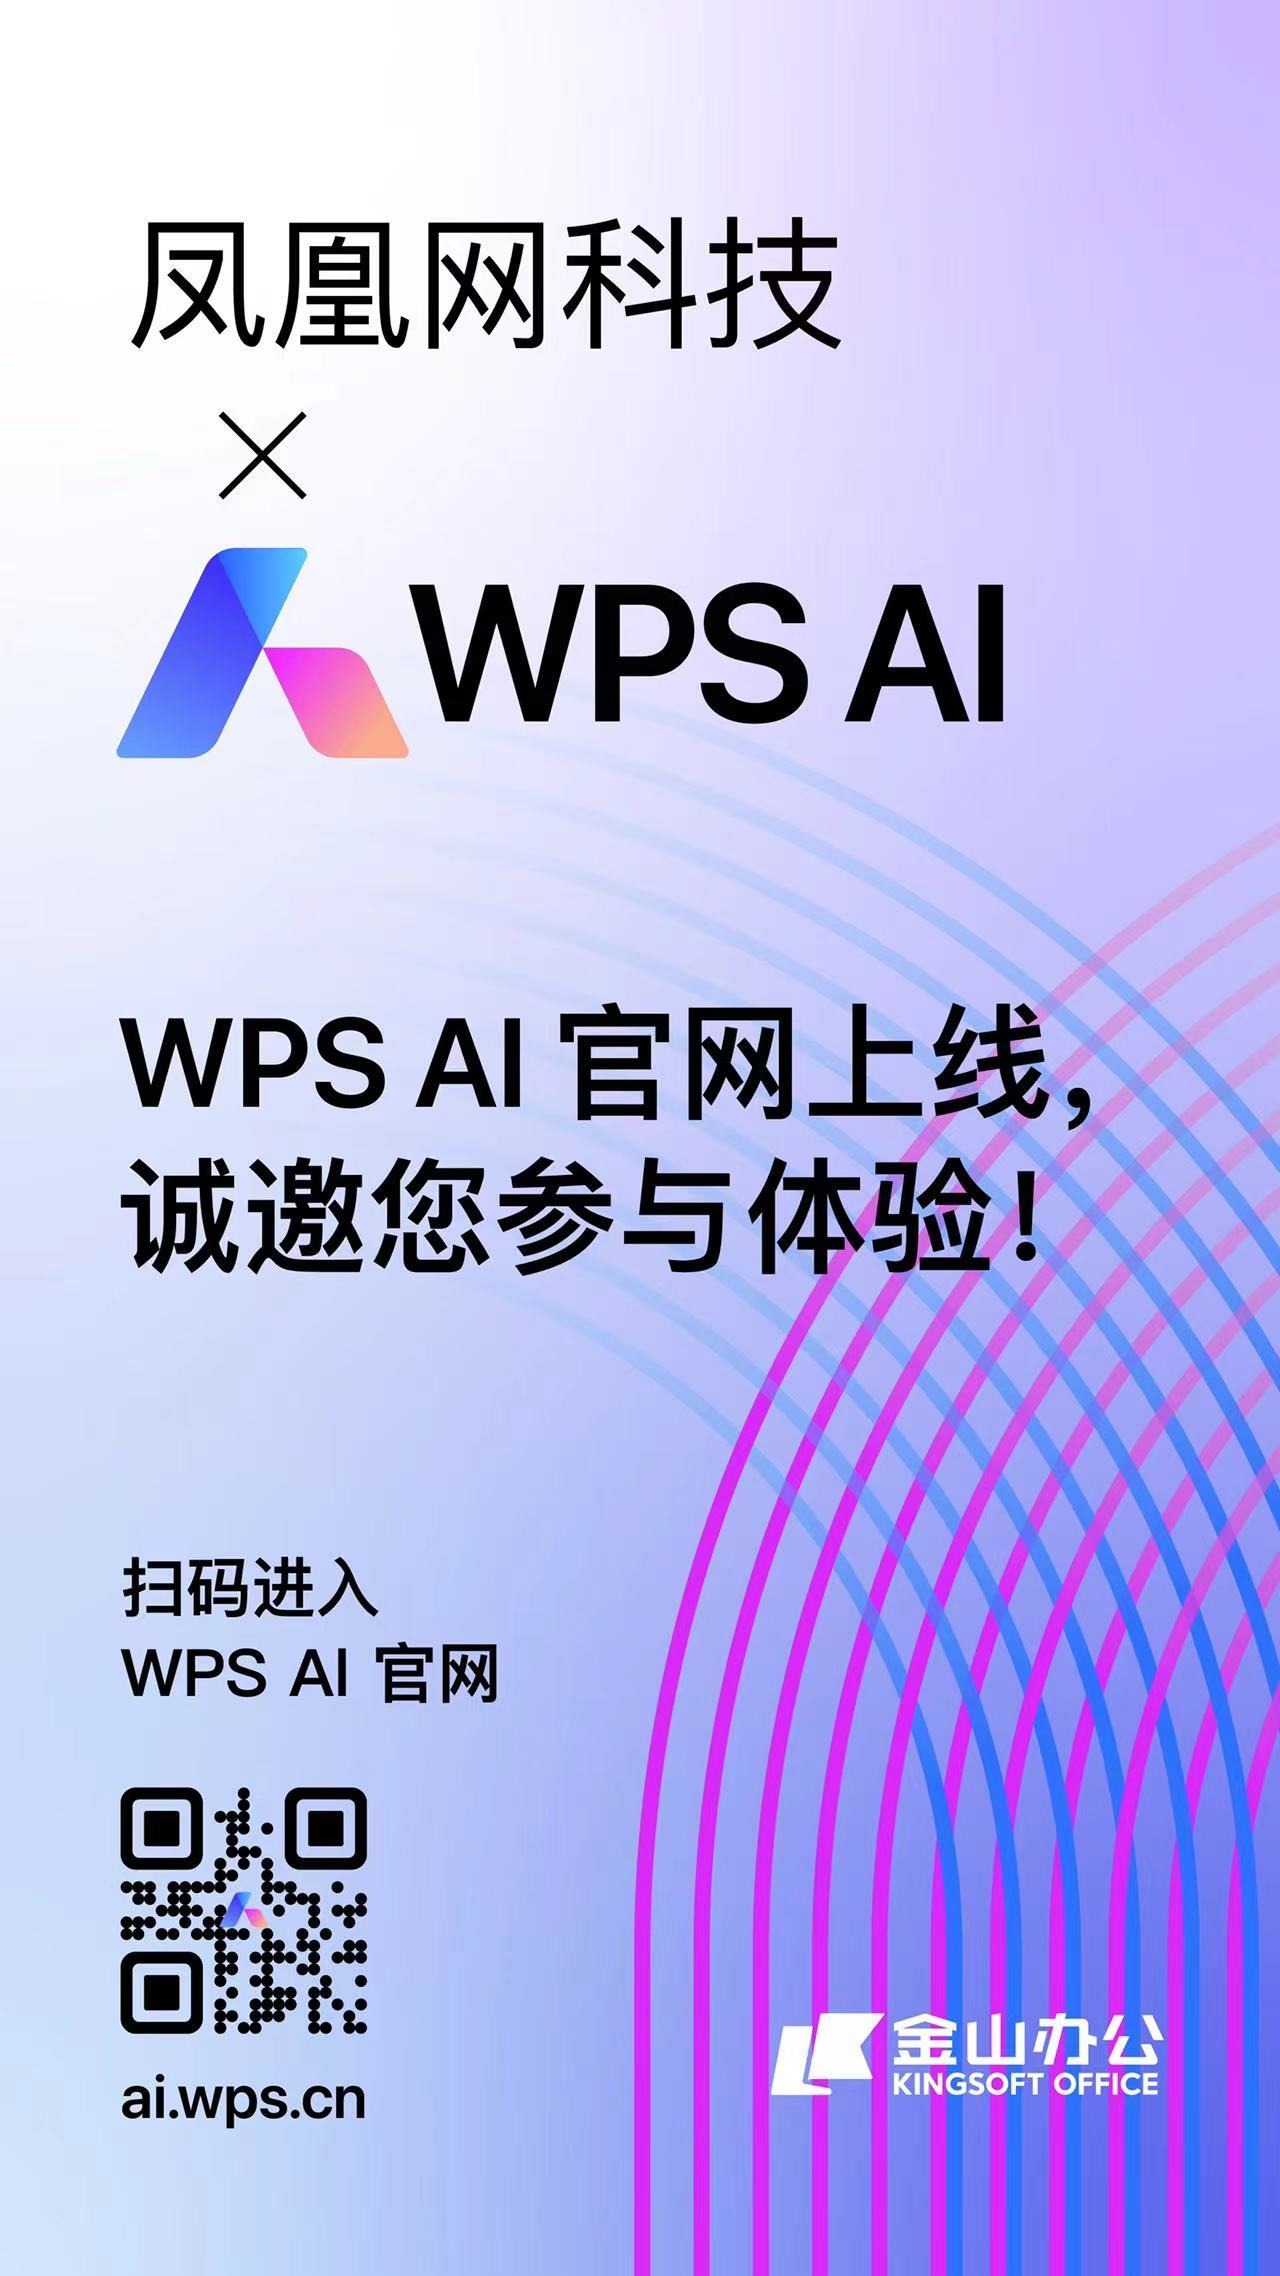 WPS AI正式定名 这两类用户均可申请